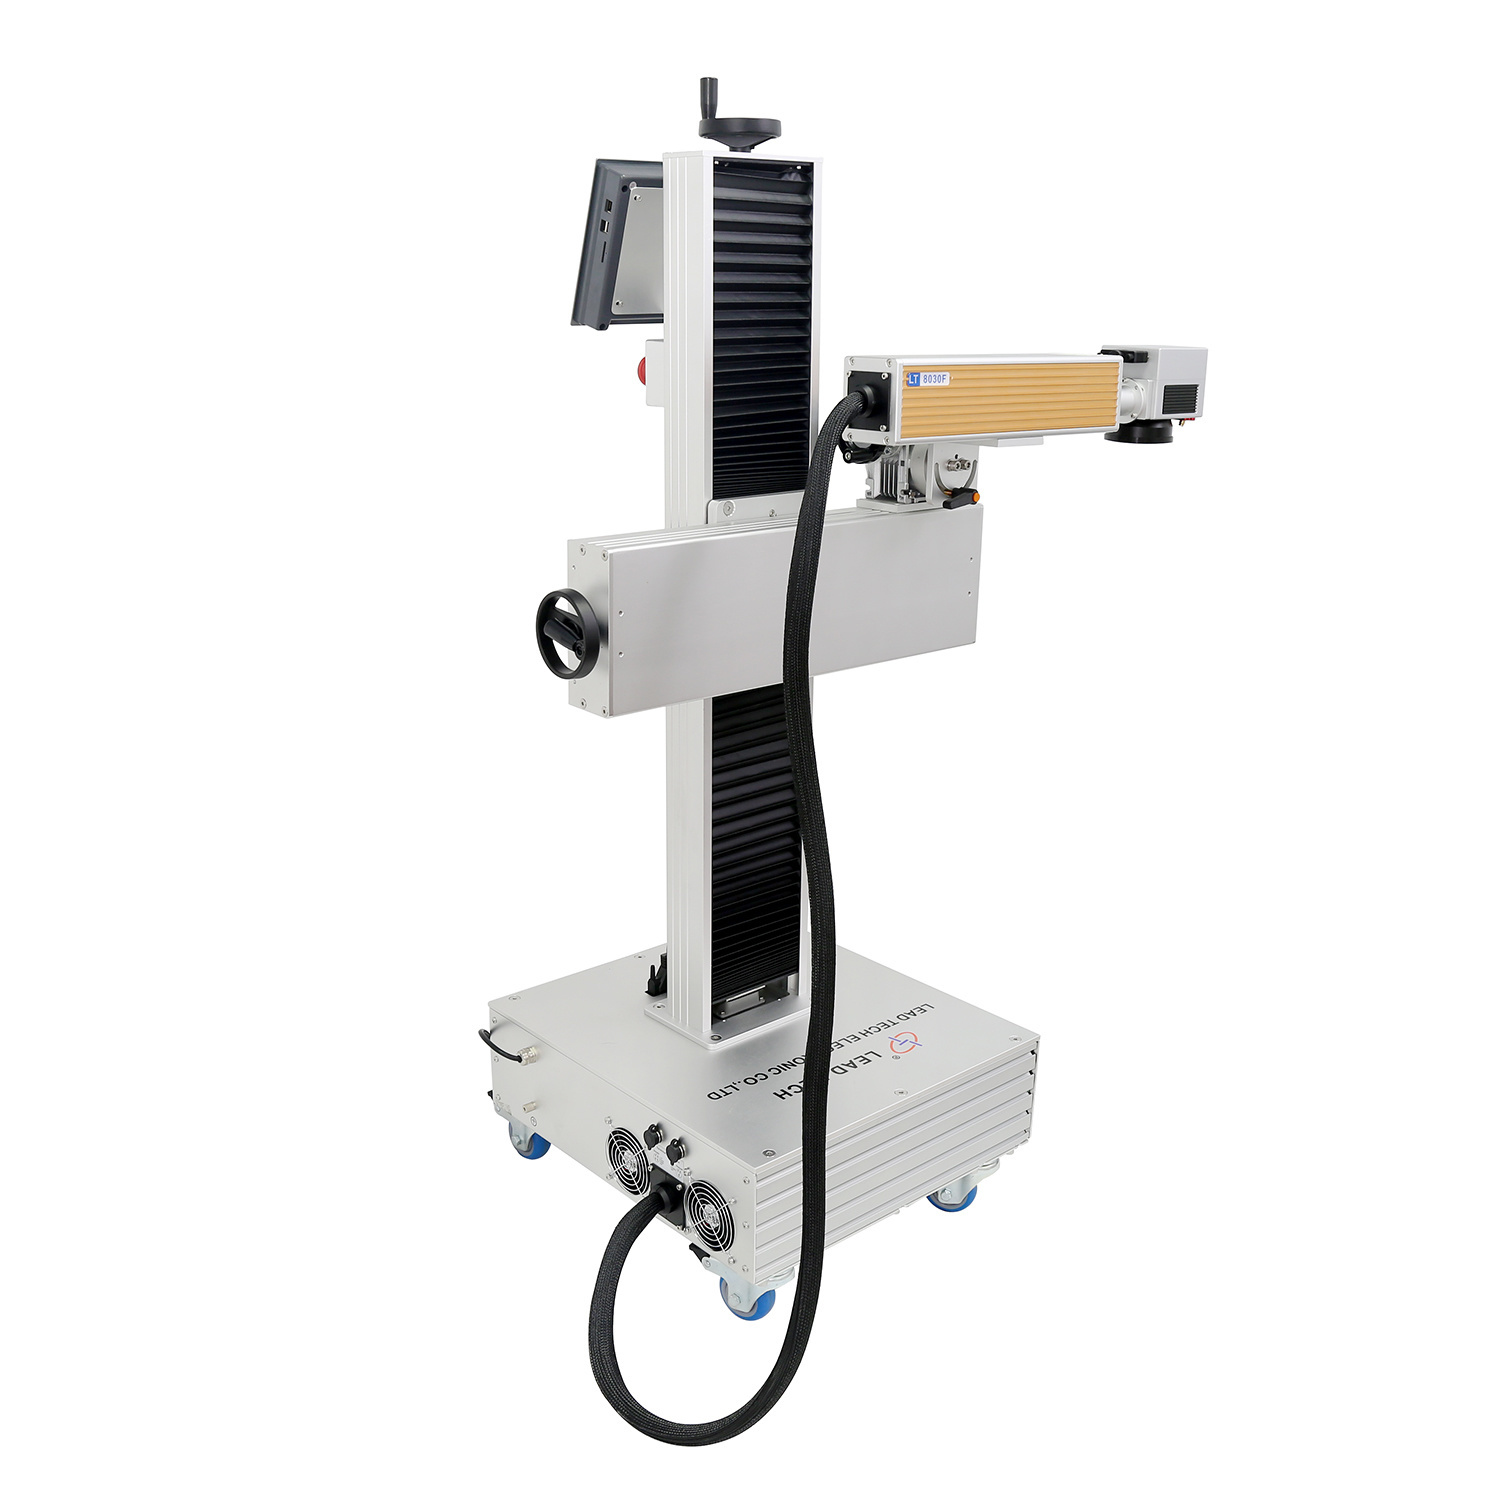 Lt8020f/Lt8030f/Lt8050f Fiber Laser Marking Machine Factory Price Laser Printer